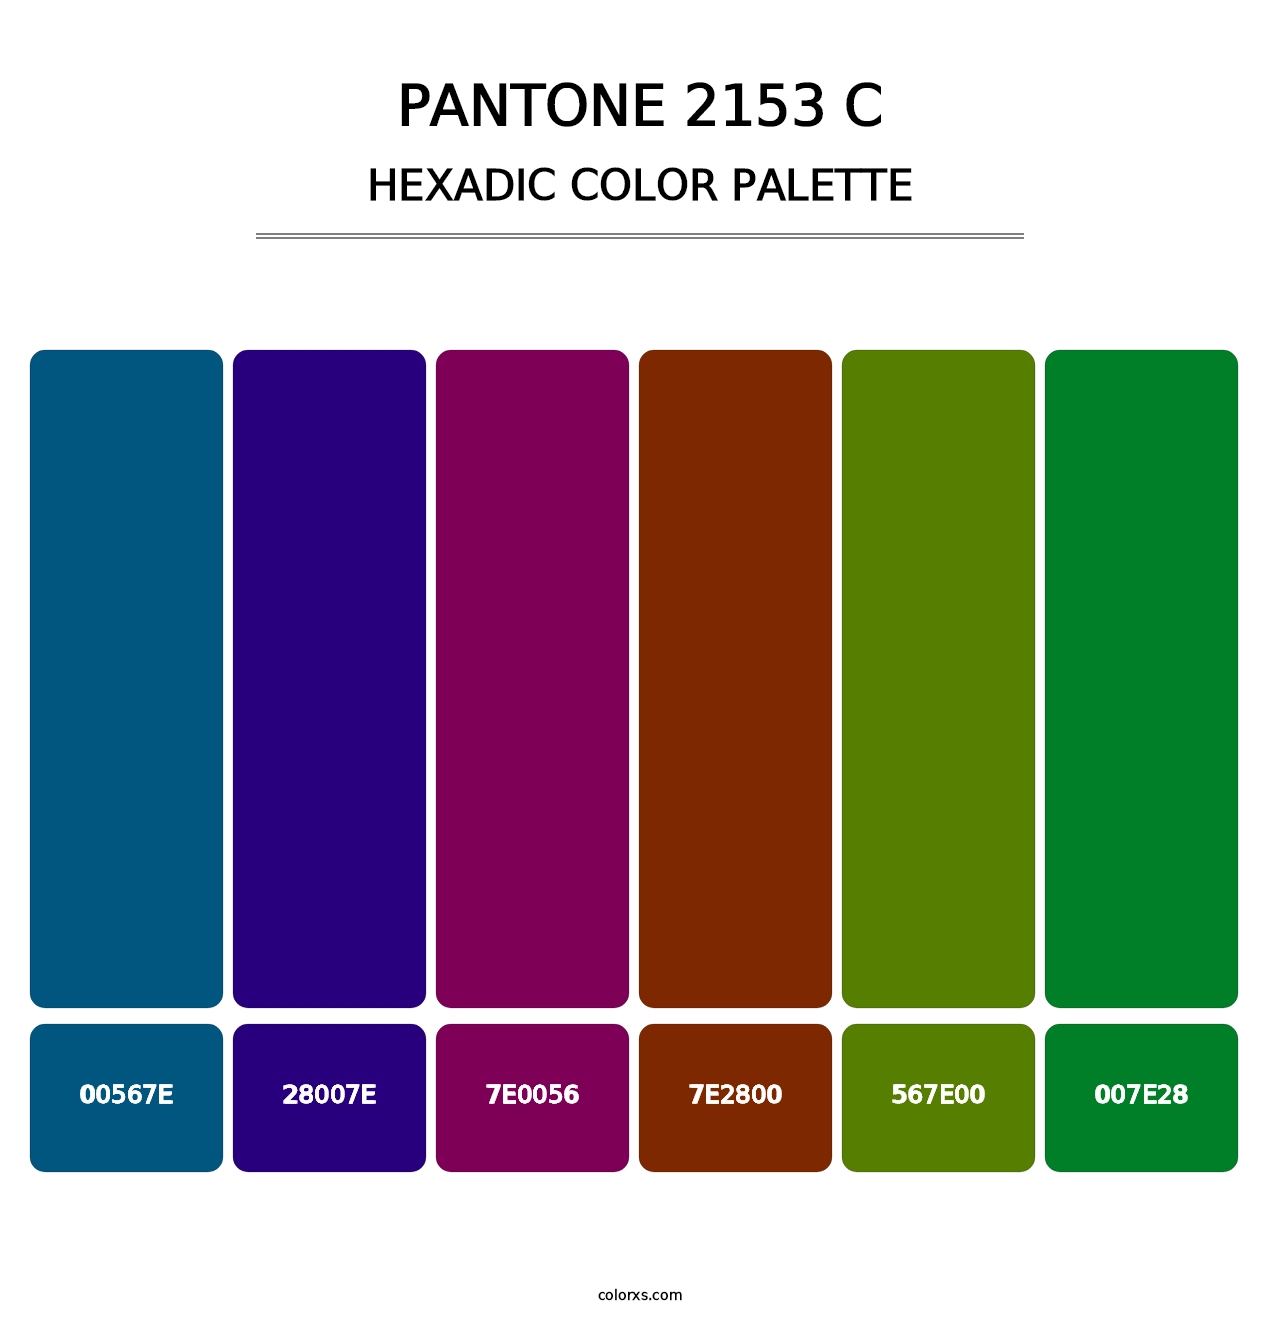 PANTONE 2153 C - Hexadic Color Palette